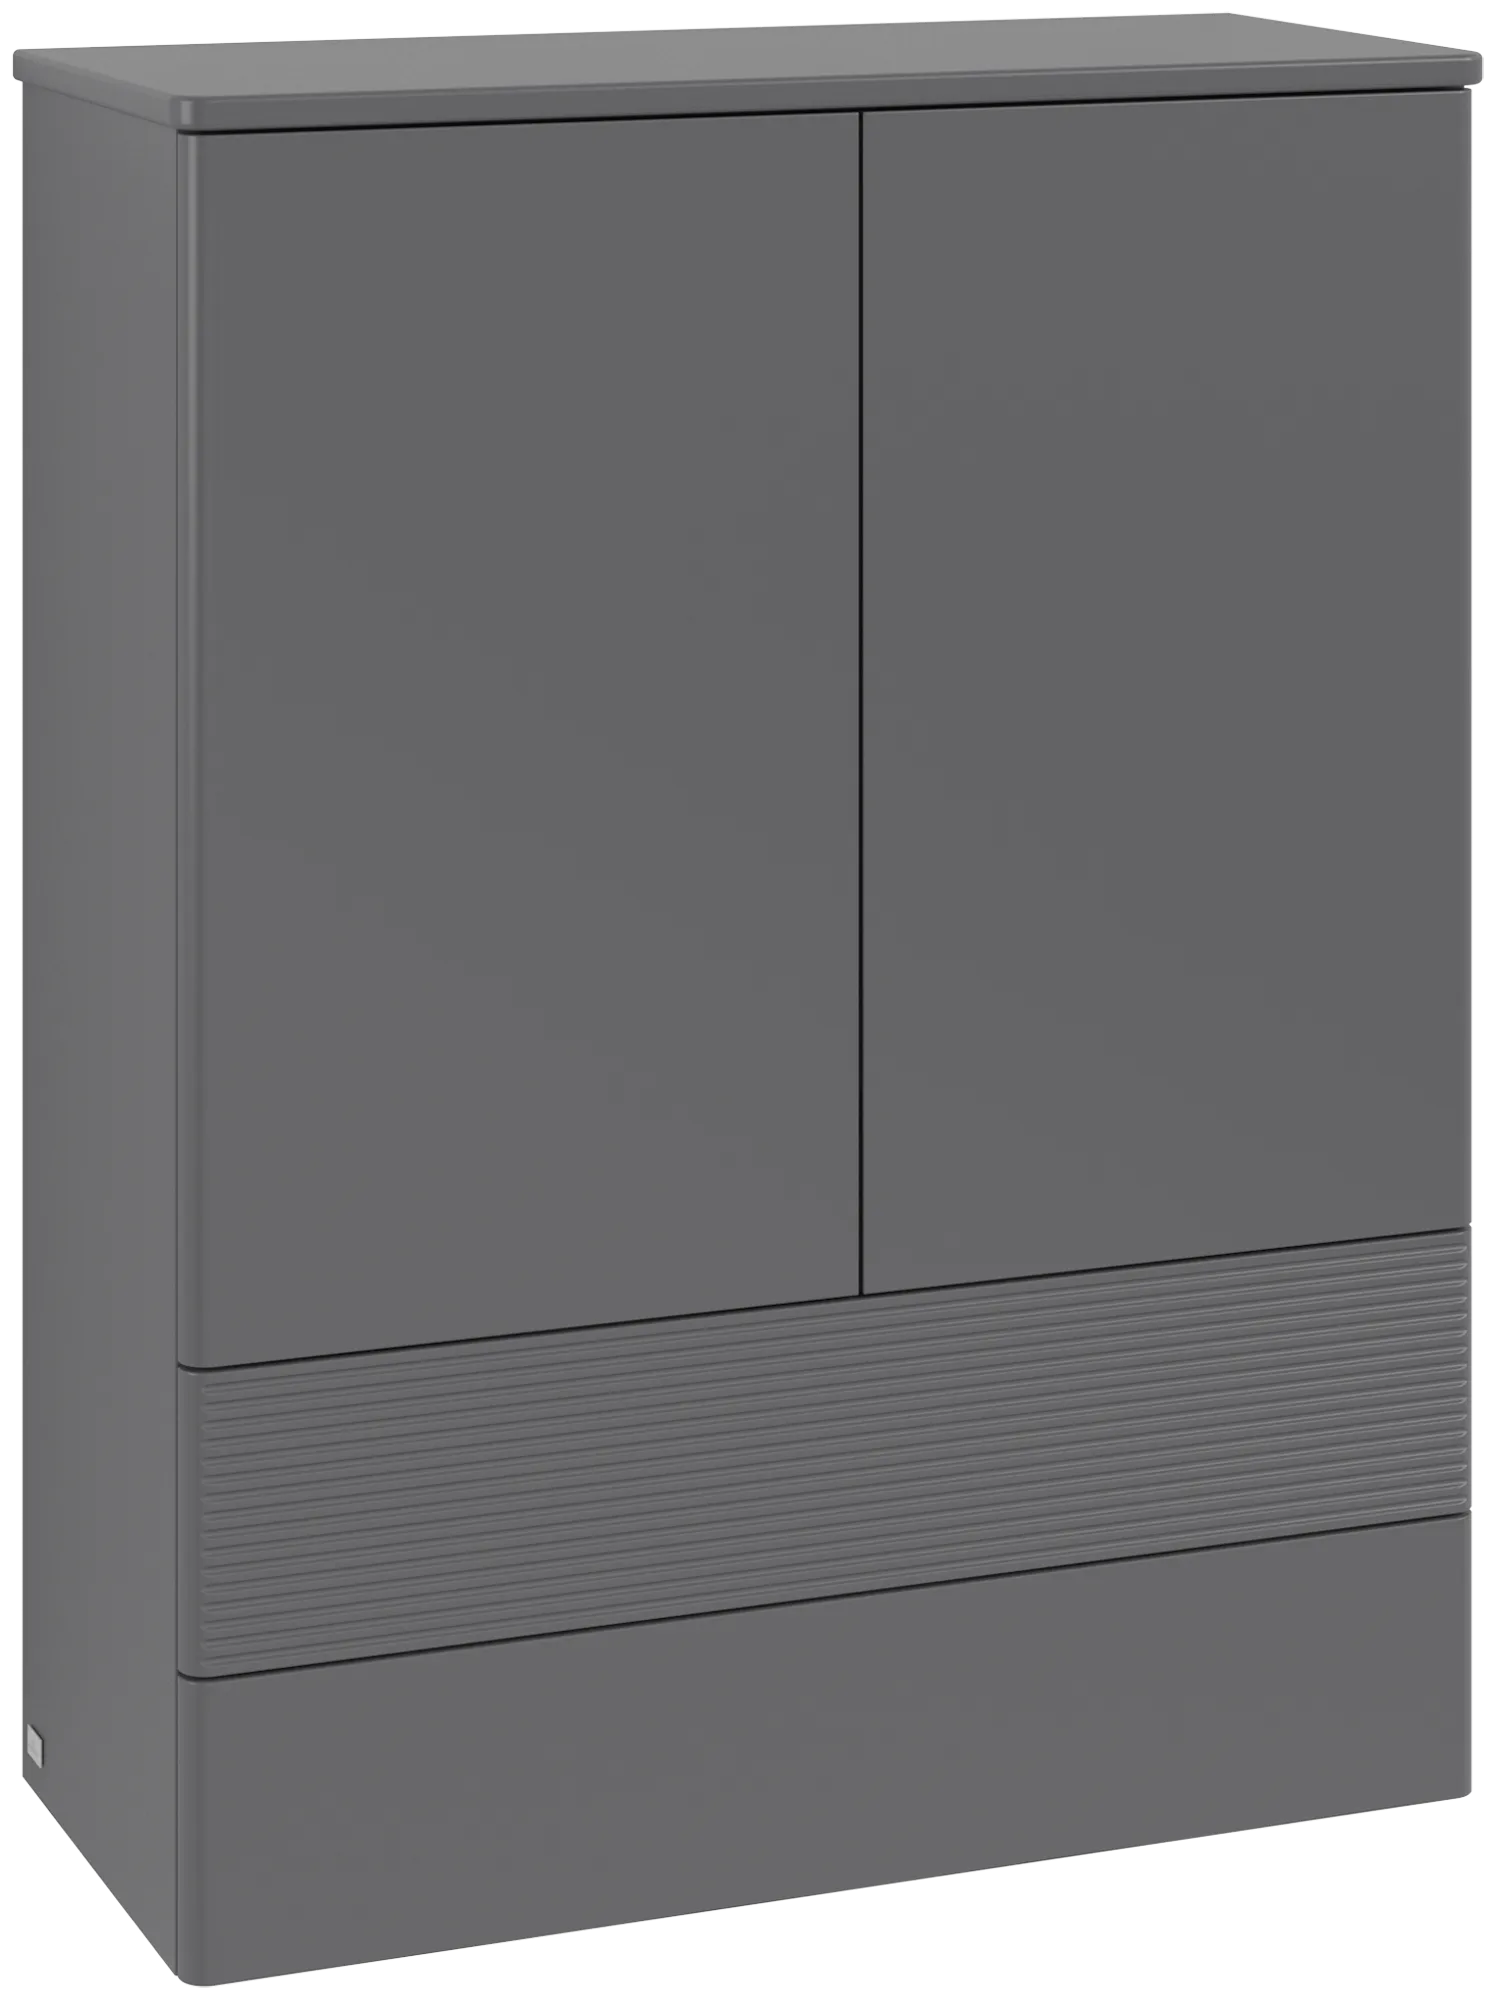 VILLEROY BOCH Antao Highboard, 2 doors, 814 x 1039 x 356 mm, Front with grain texture, Anthracite Matt Lacquer / Anthracite Matt Lacquer #K47100GK resmi